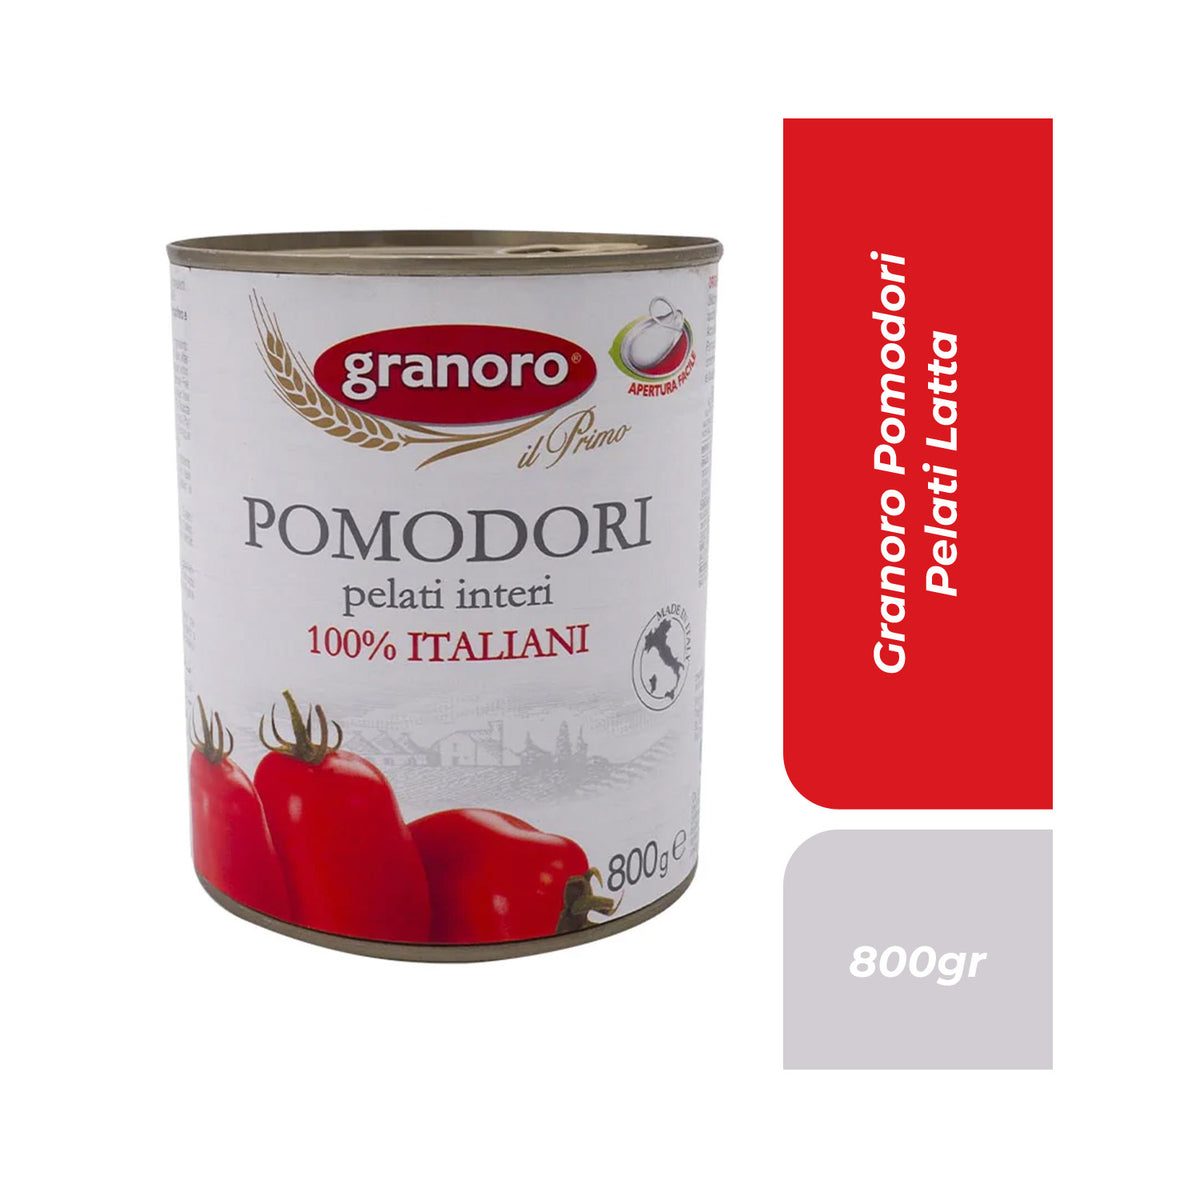 Granoro Pomodori Pelati Latta 800gr.